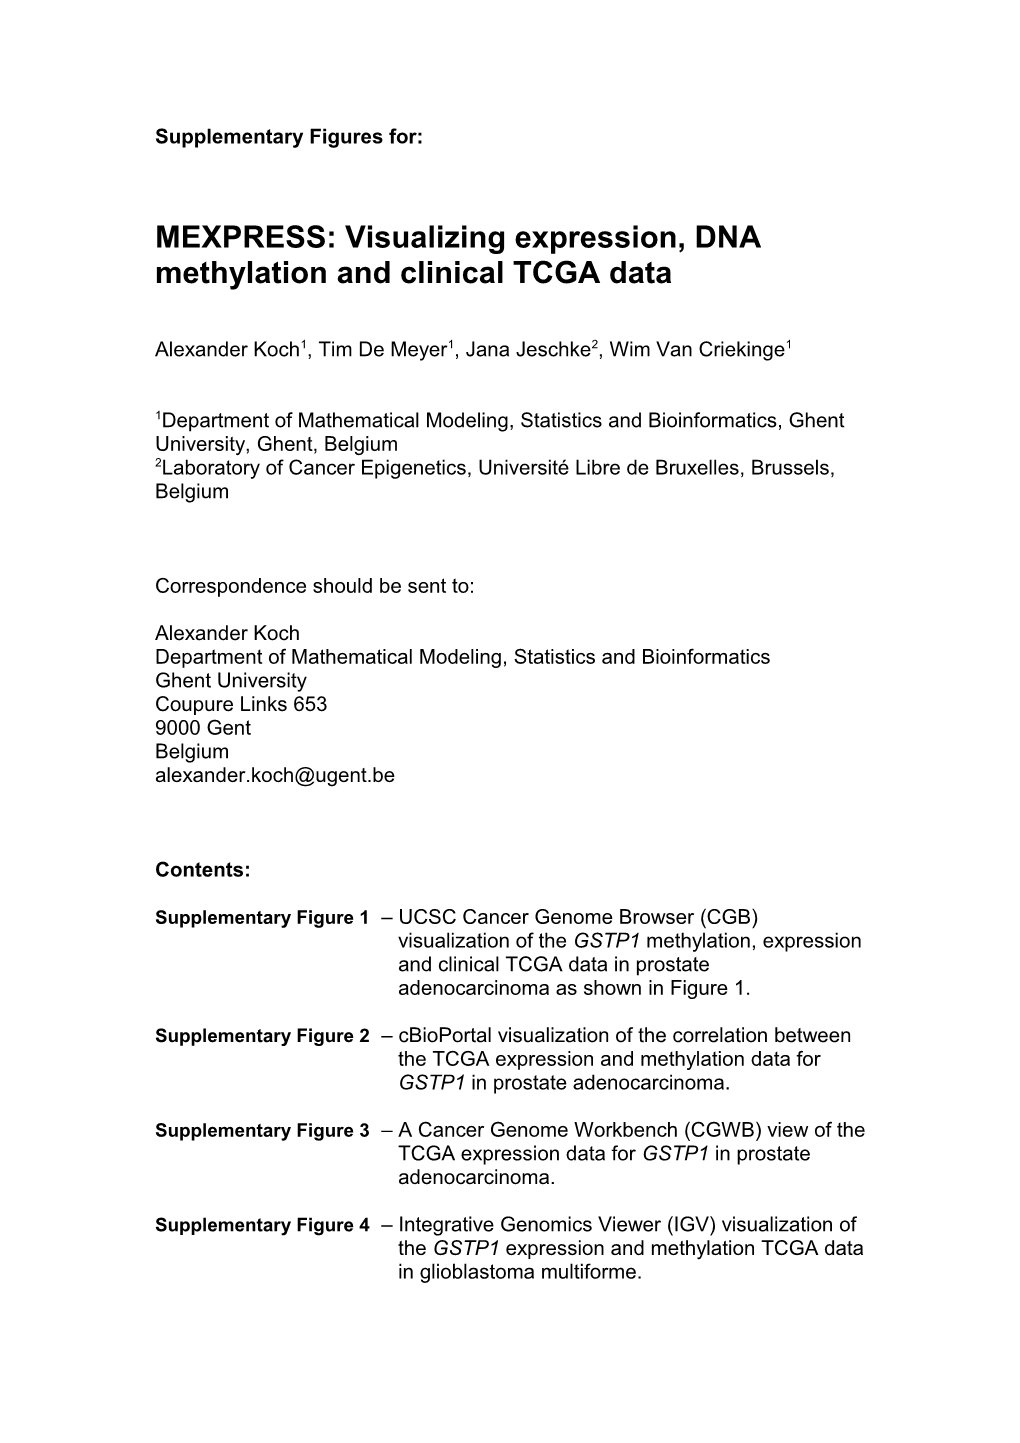 MEXPRESS: Visualizingexpression, DNA Methylation and Clinical TCGA Data